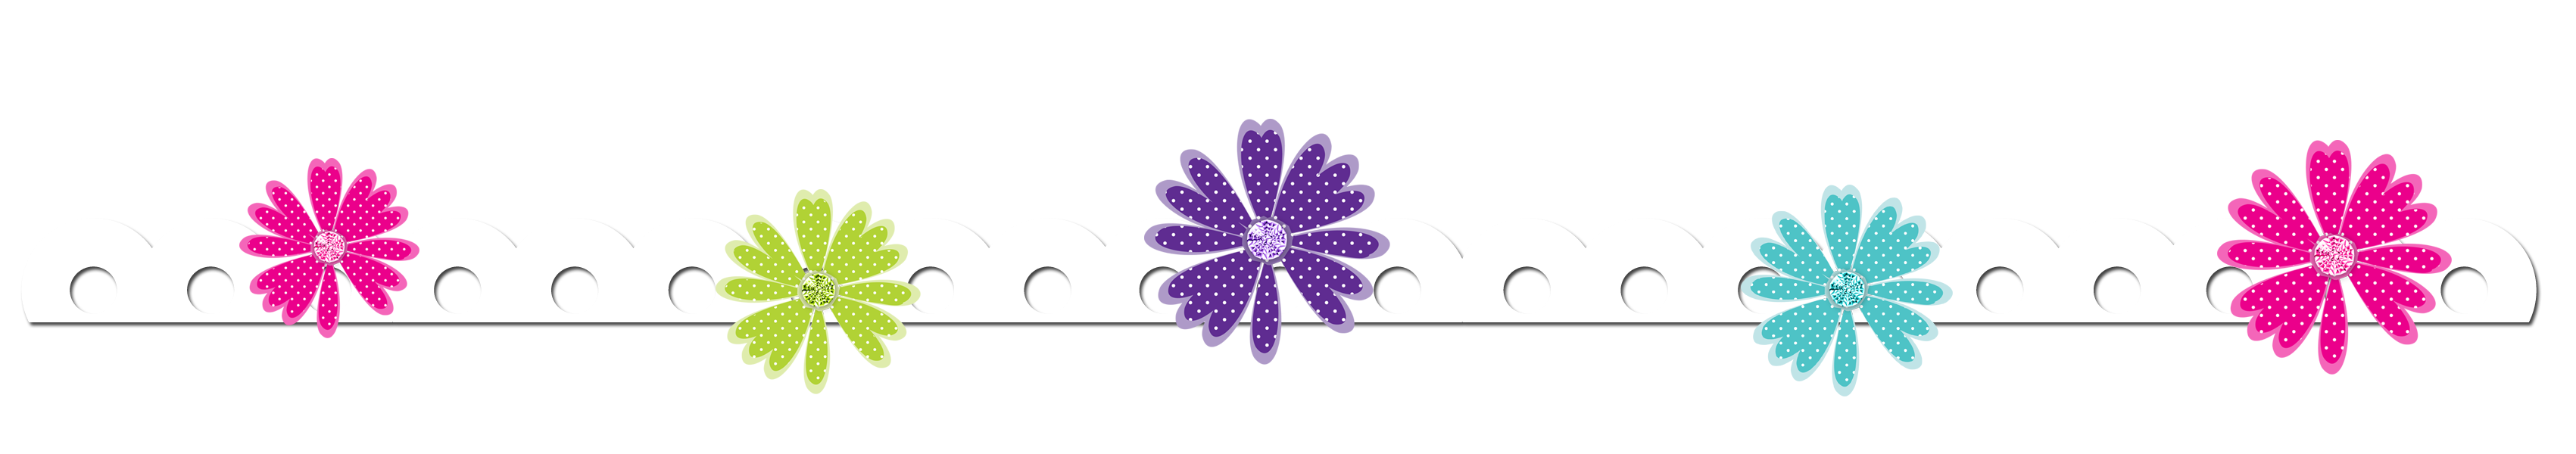 free purple flower border clip art - photo #39